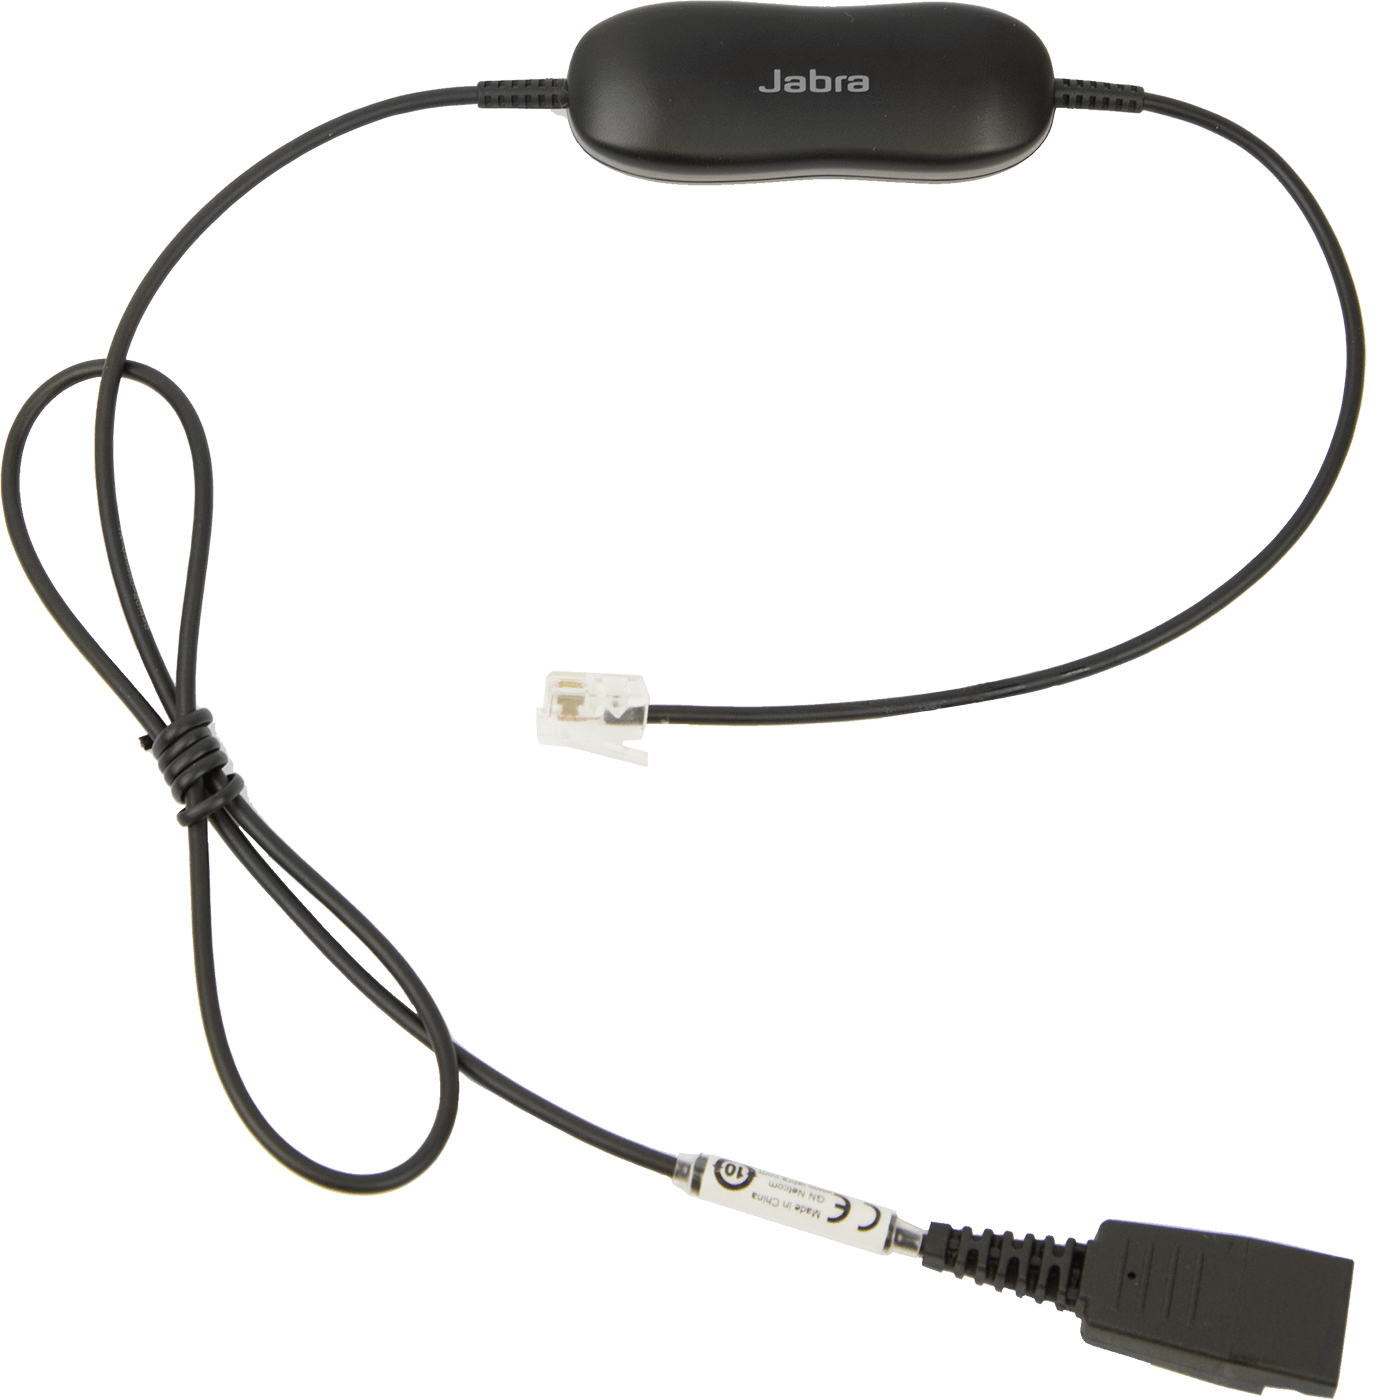 Photos - Portable Audio Accessories Jabra GN1216 Avaya Cord 88001-03 